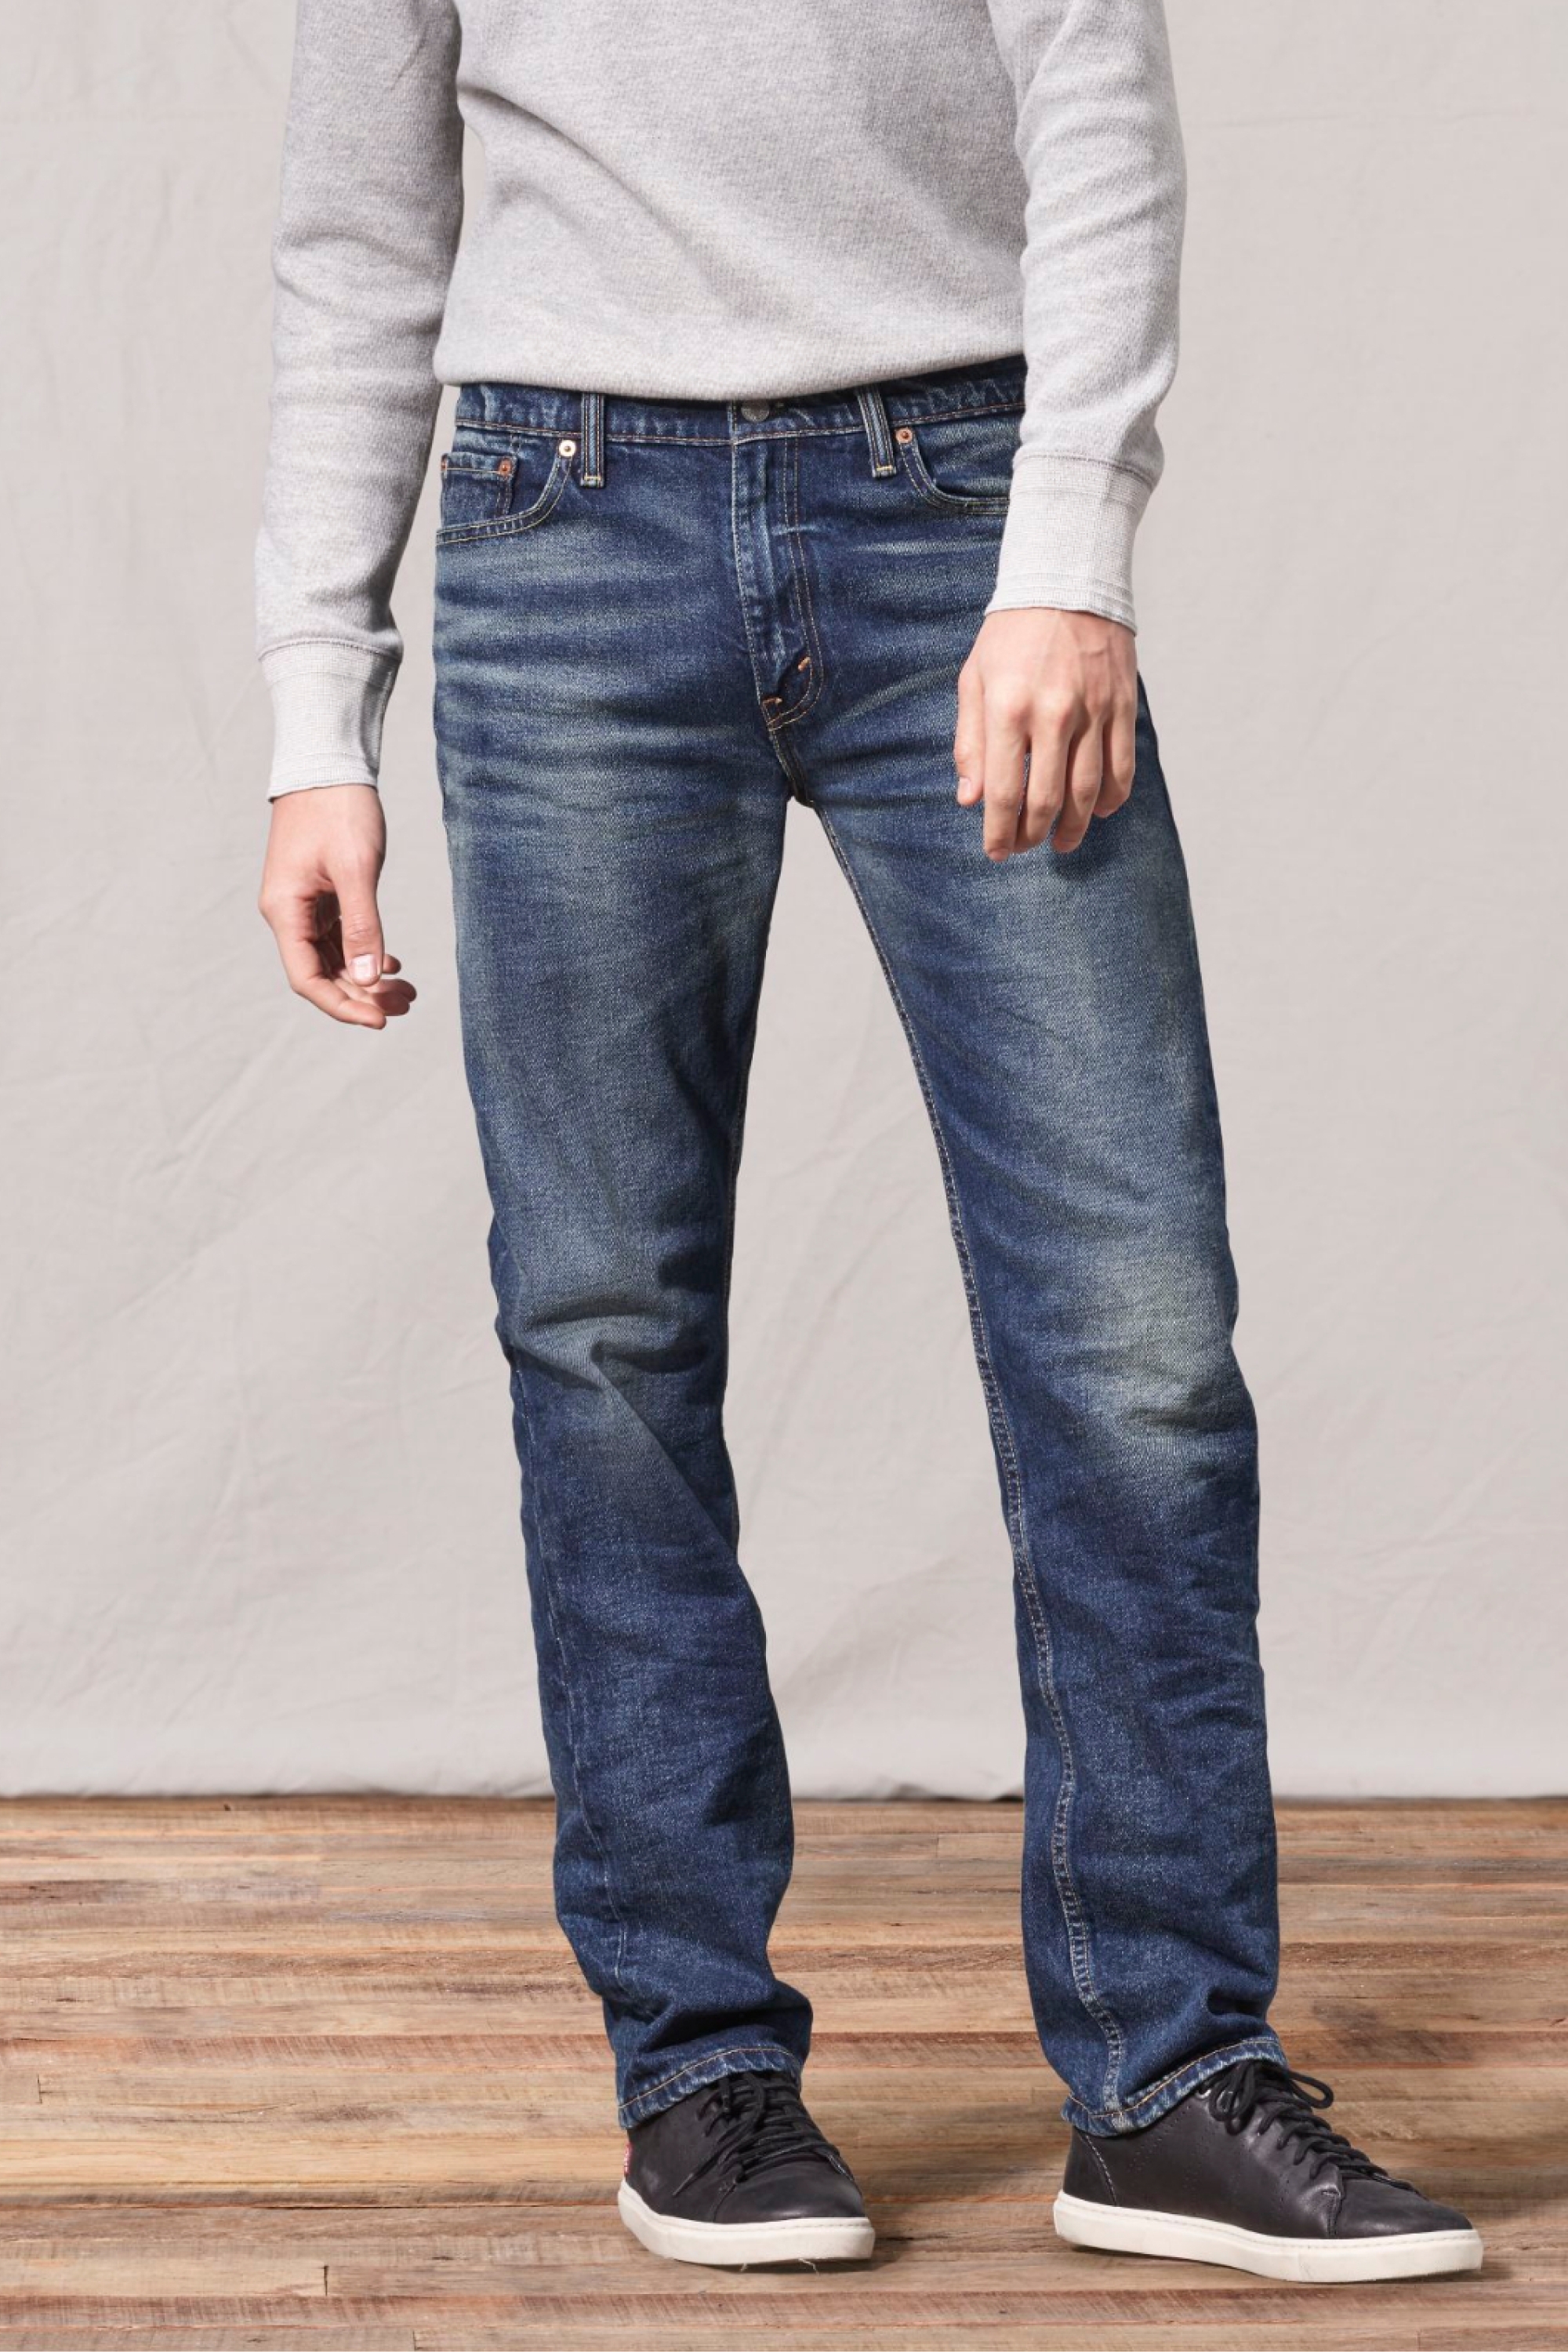 levi's men's jeans style guide